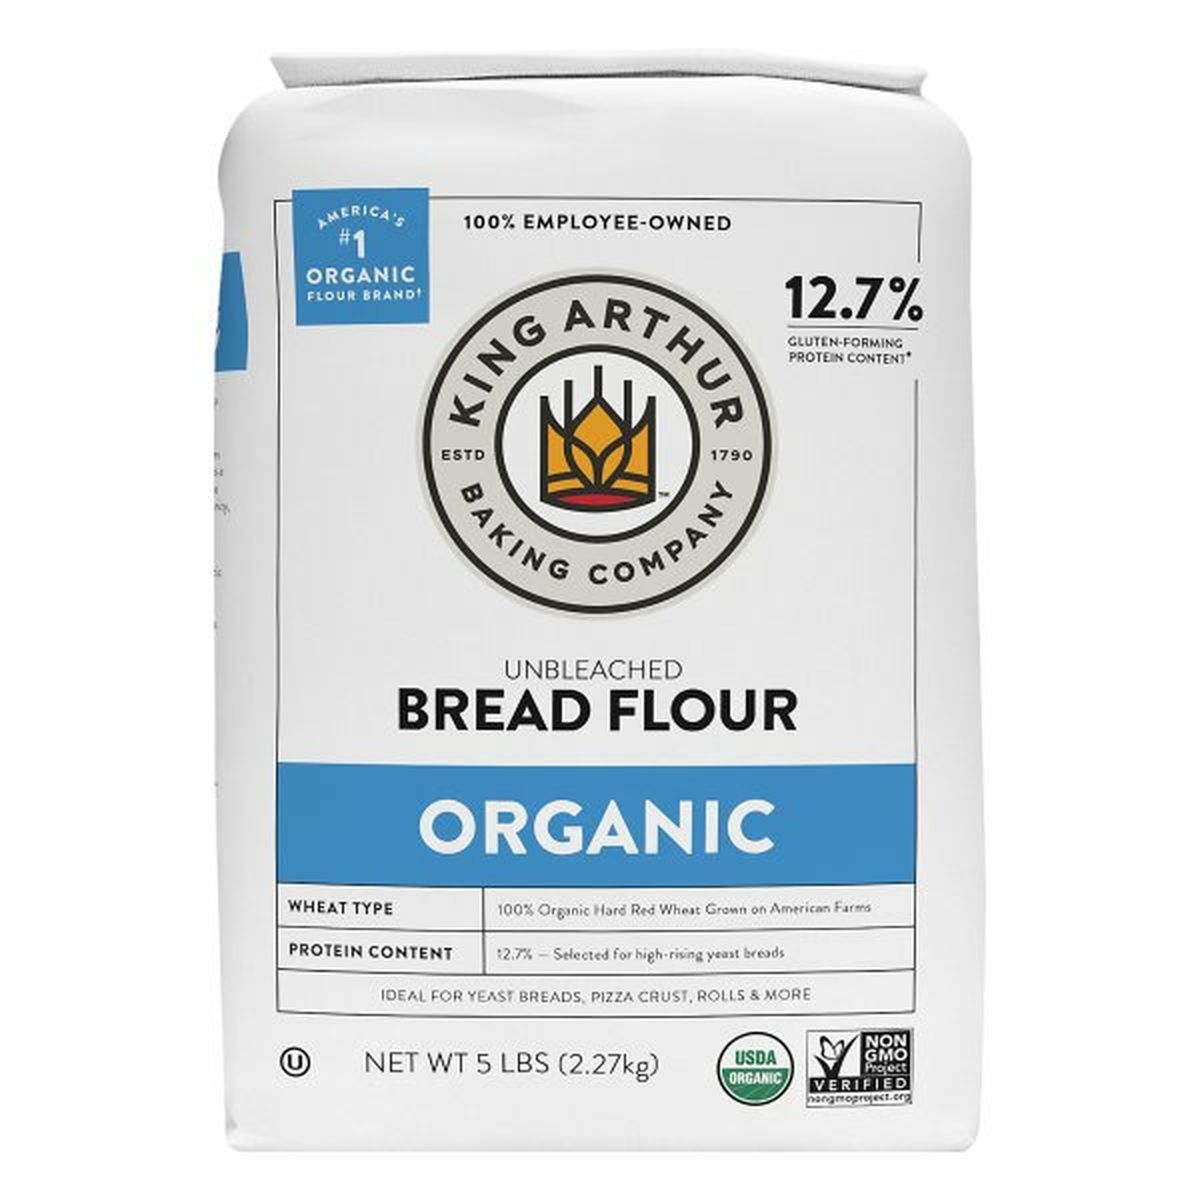 Calories in King Arthur Baking Company Bread Flour, Unbleached, Organic